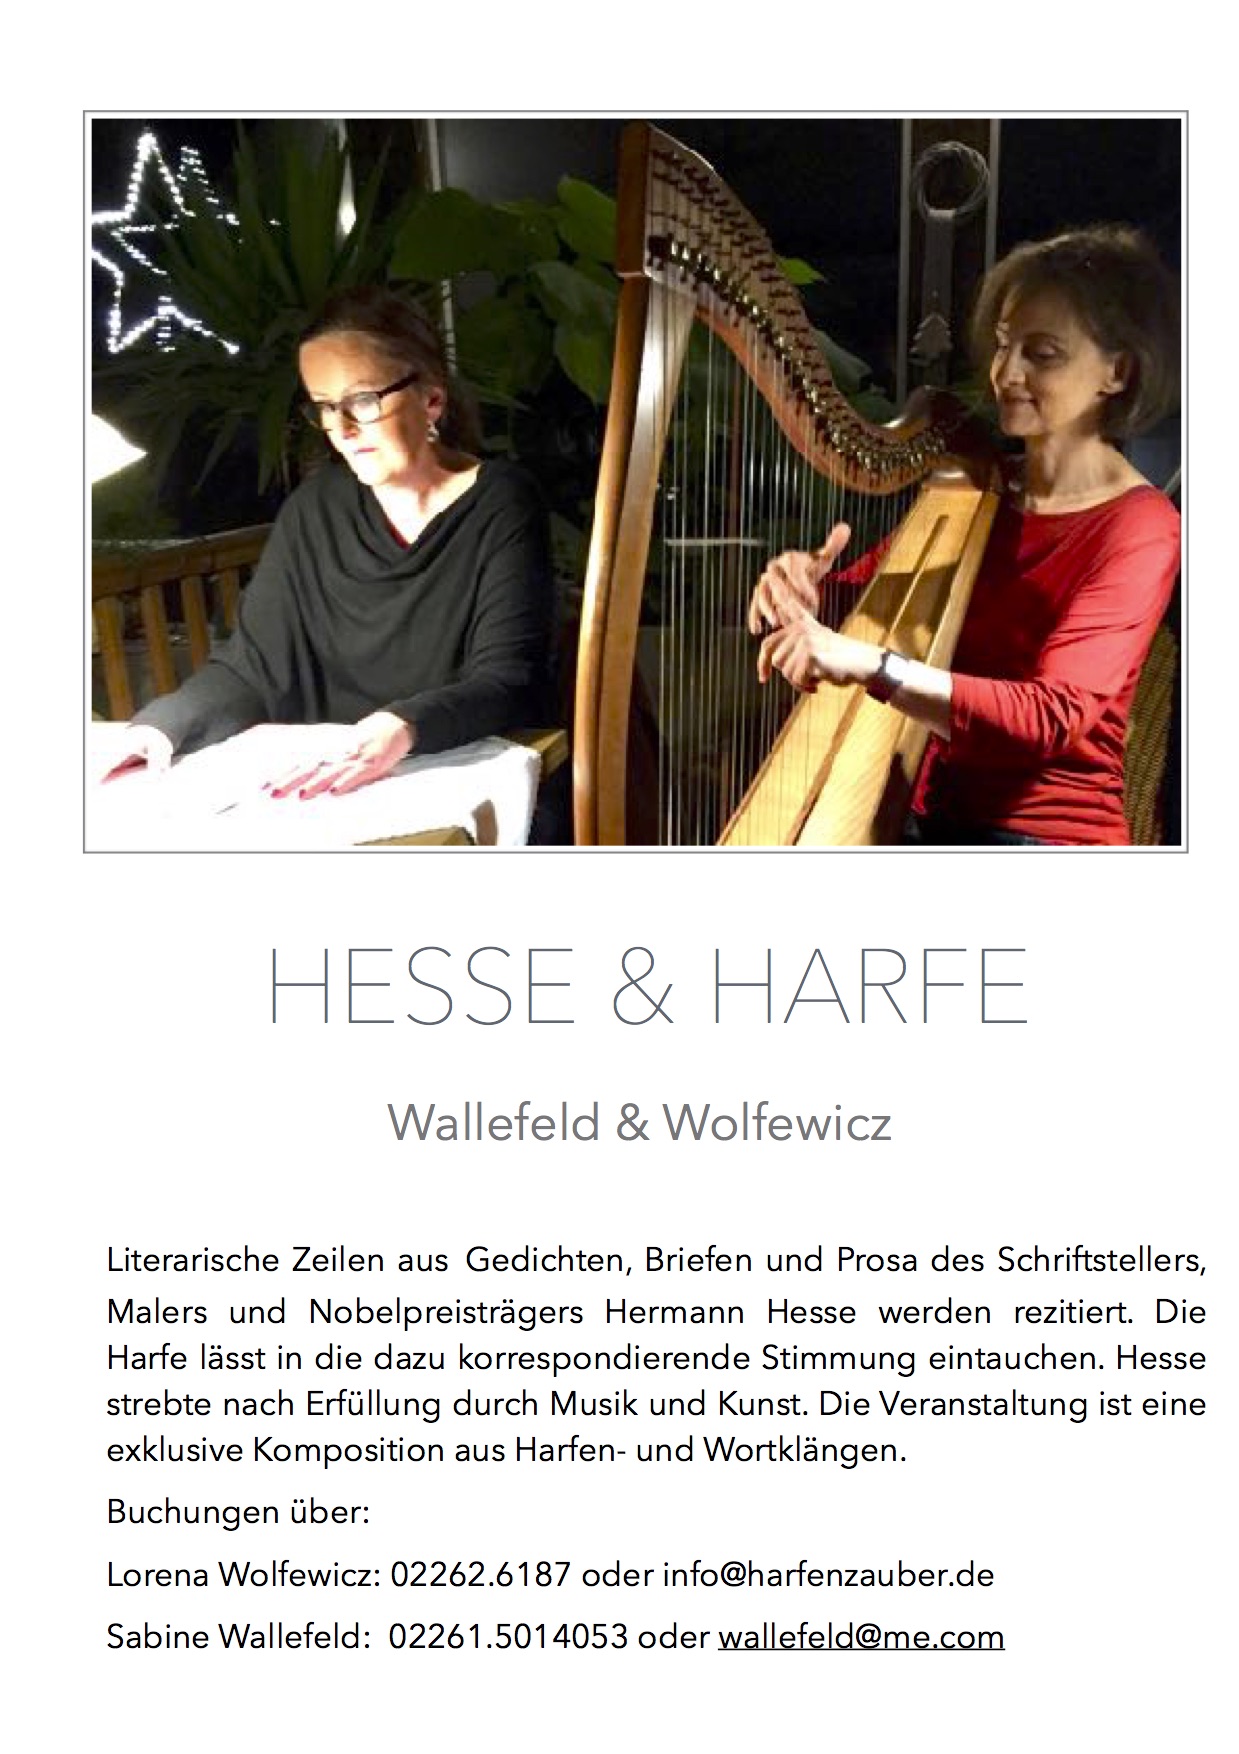 Hesse & Harfe